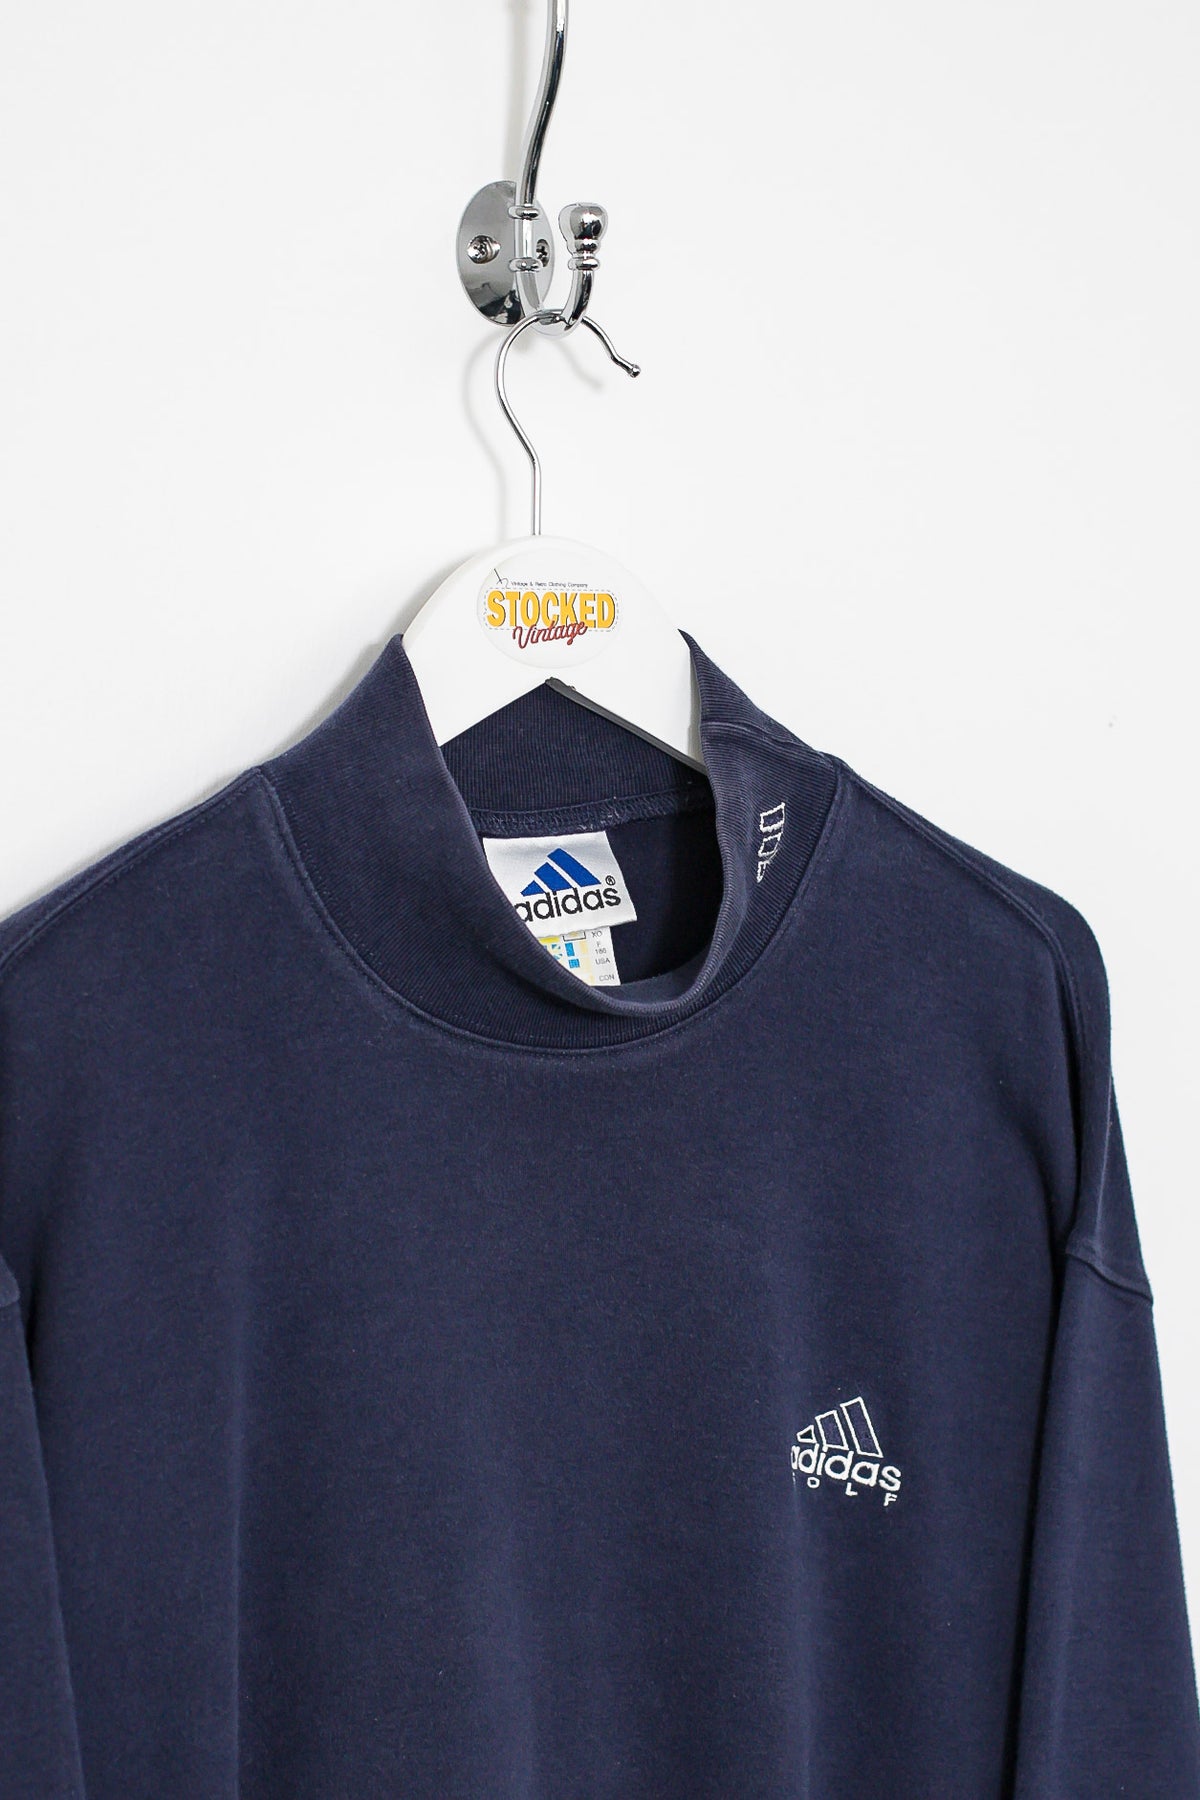 00s Adidas Golf Mock Neck Sweatshirt (L)